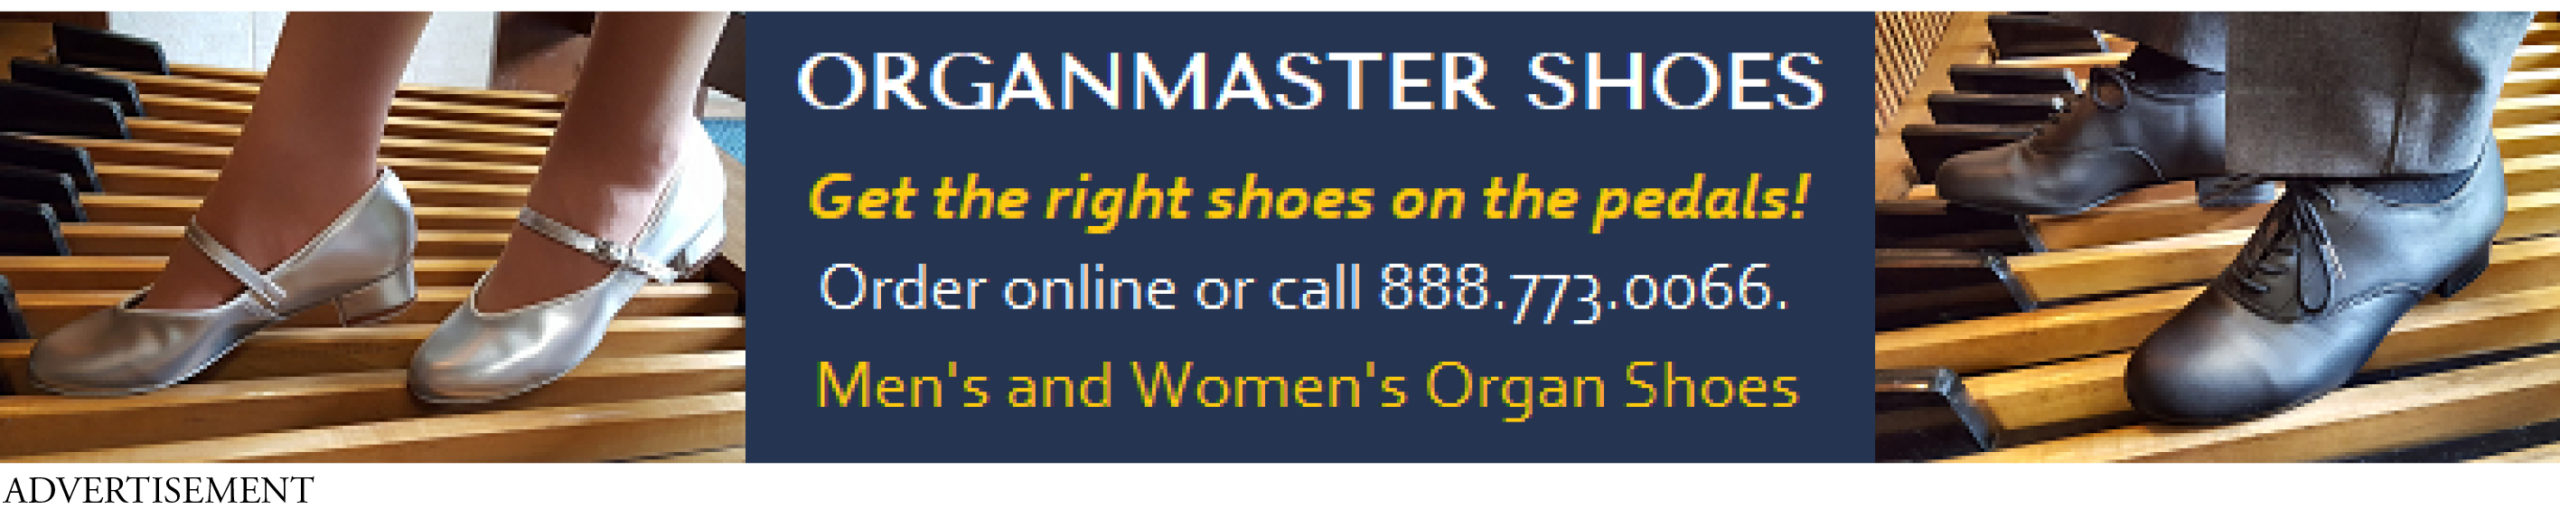 Organmaster Ad